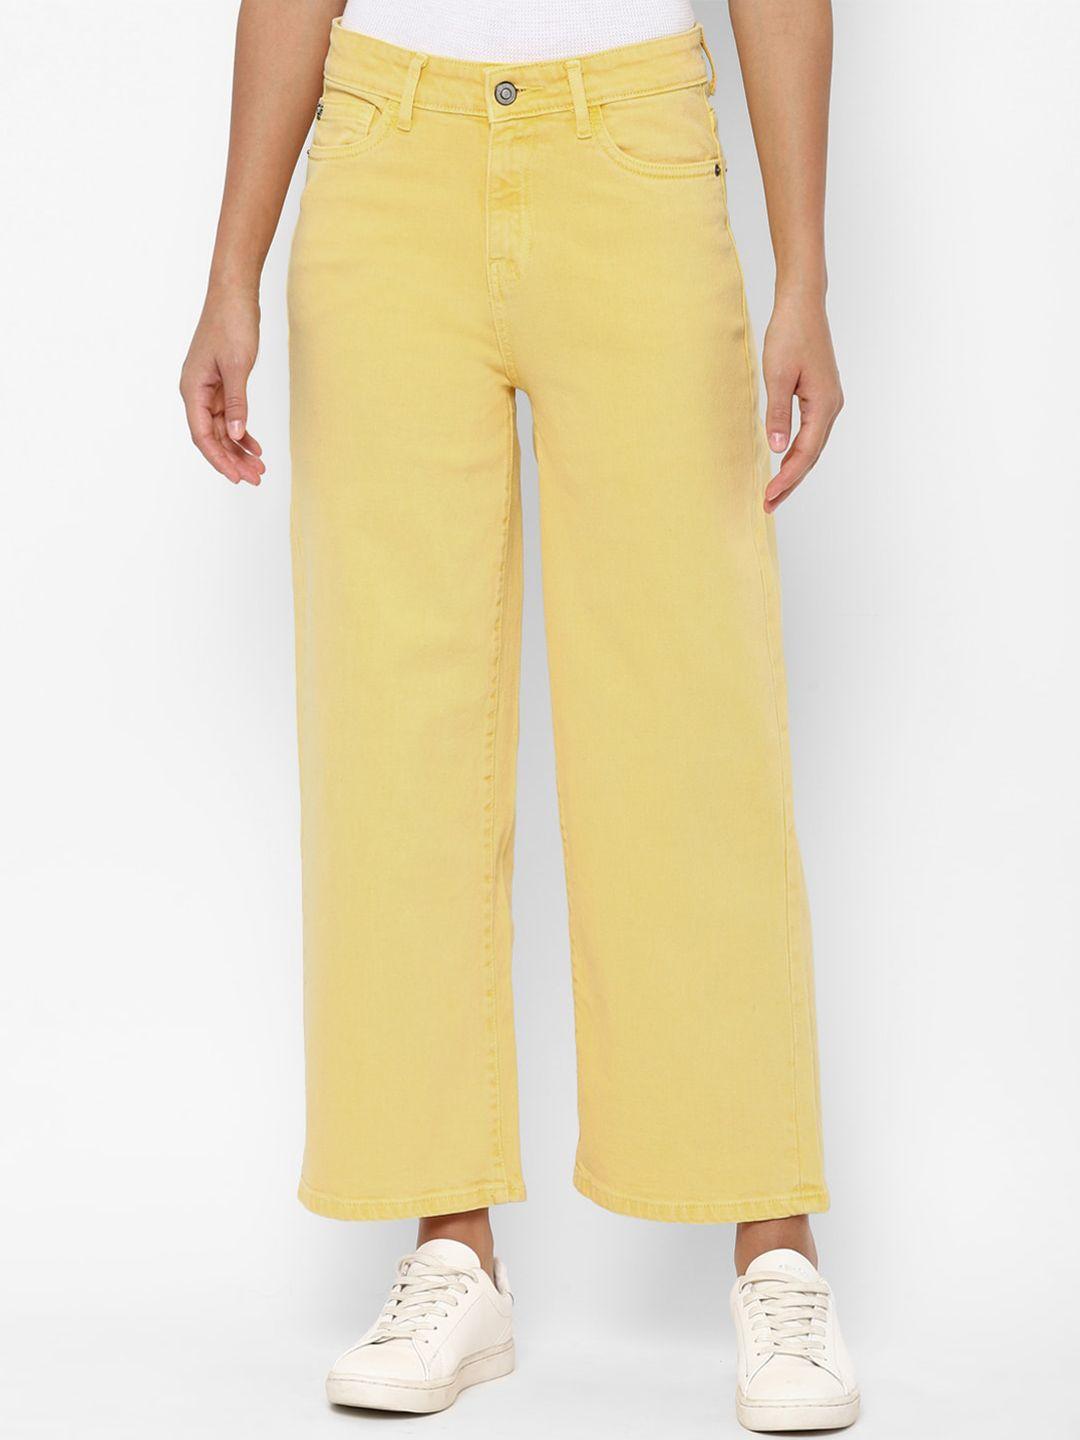 allen solly woman women yellow mid-rise jeans